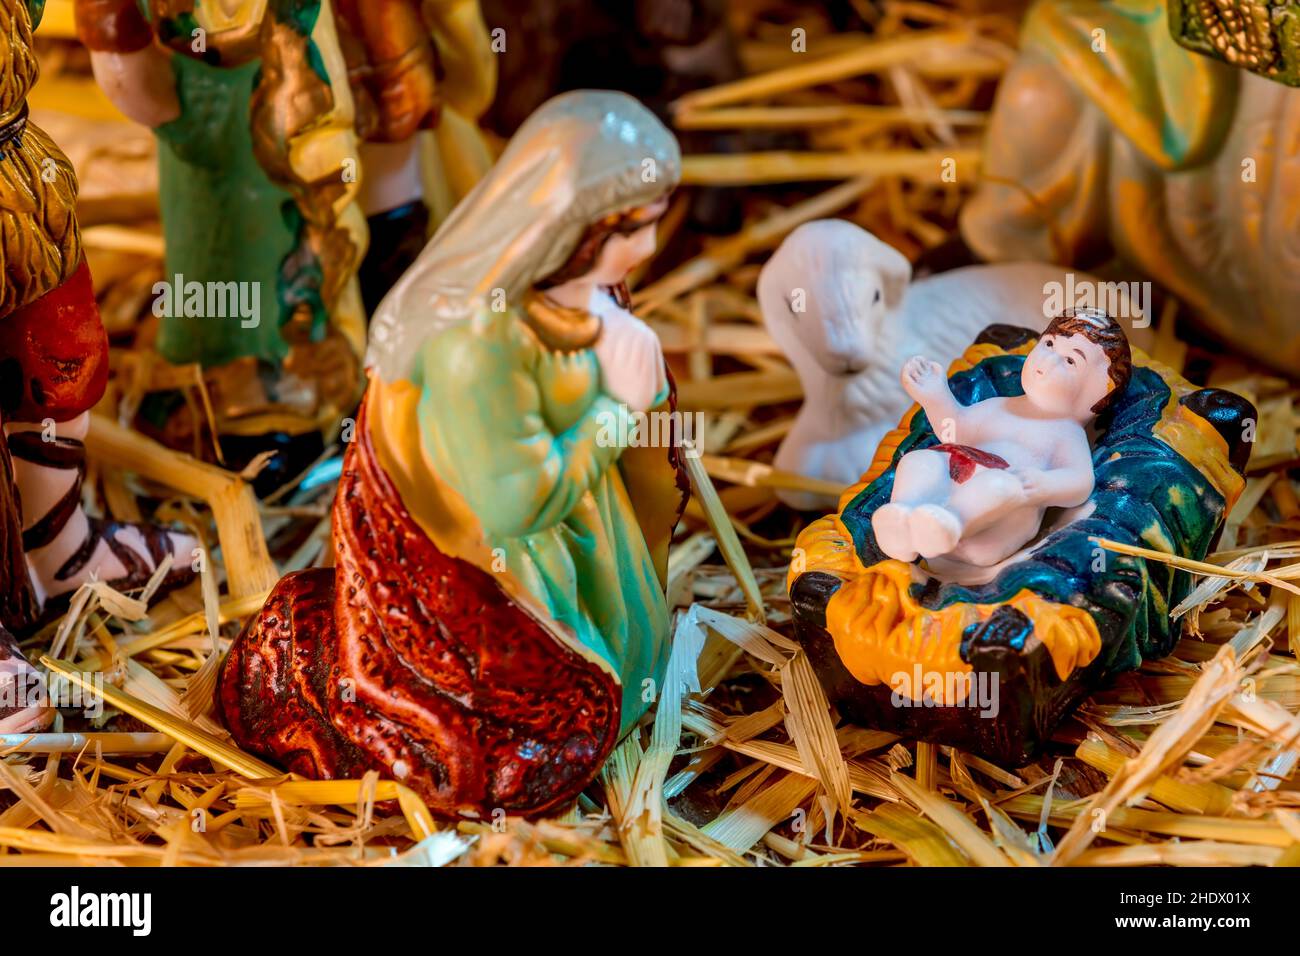 nativity scene, baby jesus, nativity scenes, jesus, jesus christ, nativity Stock Photo